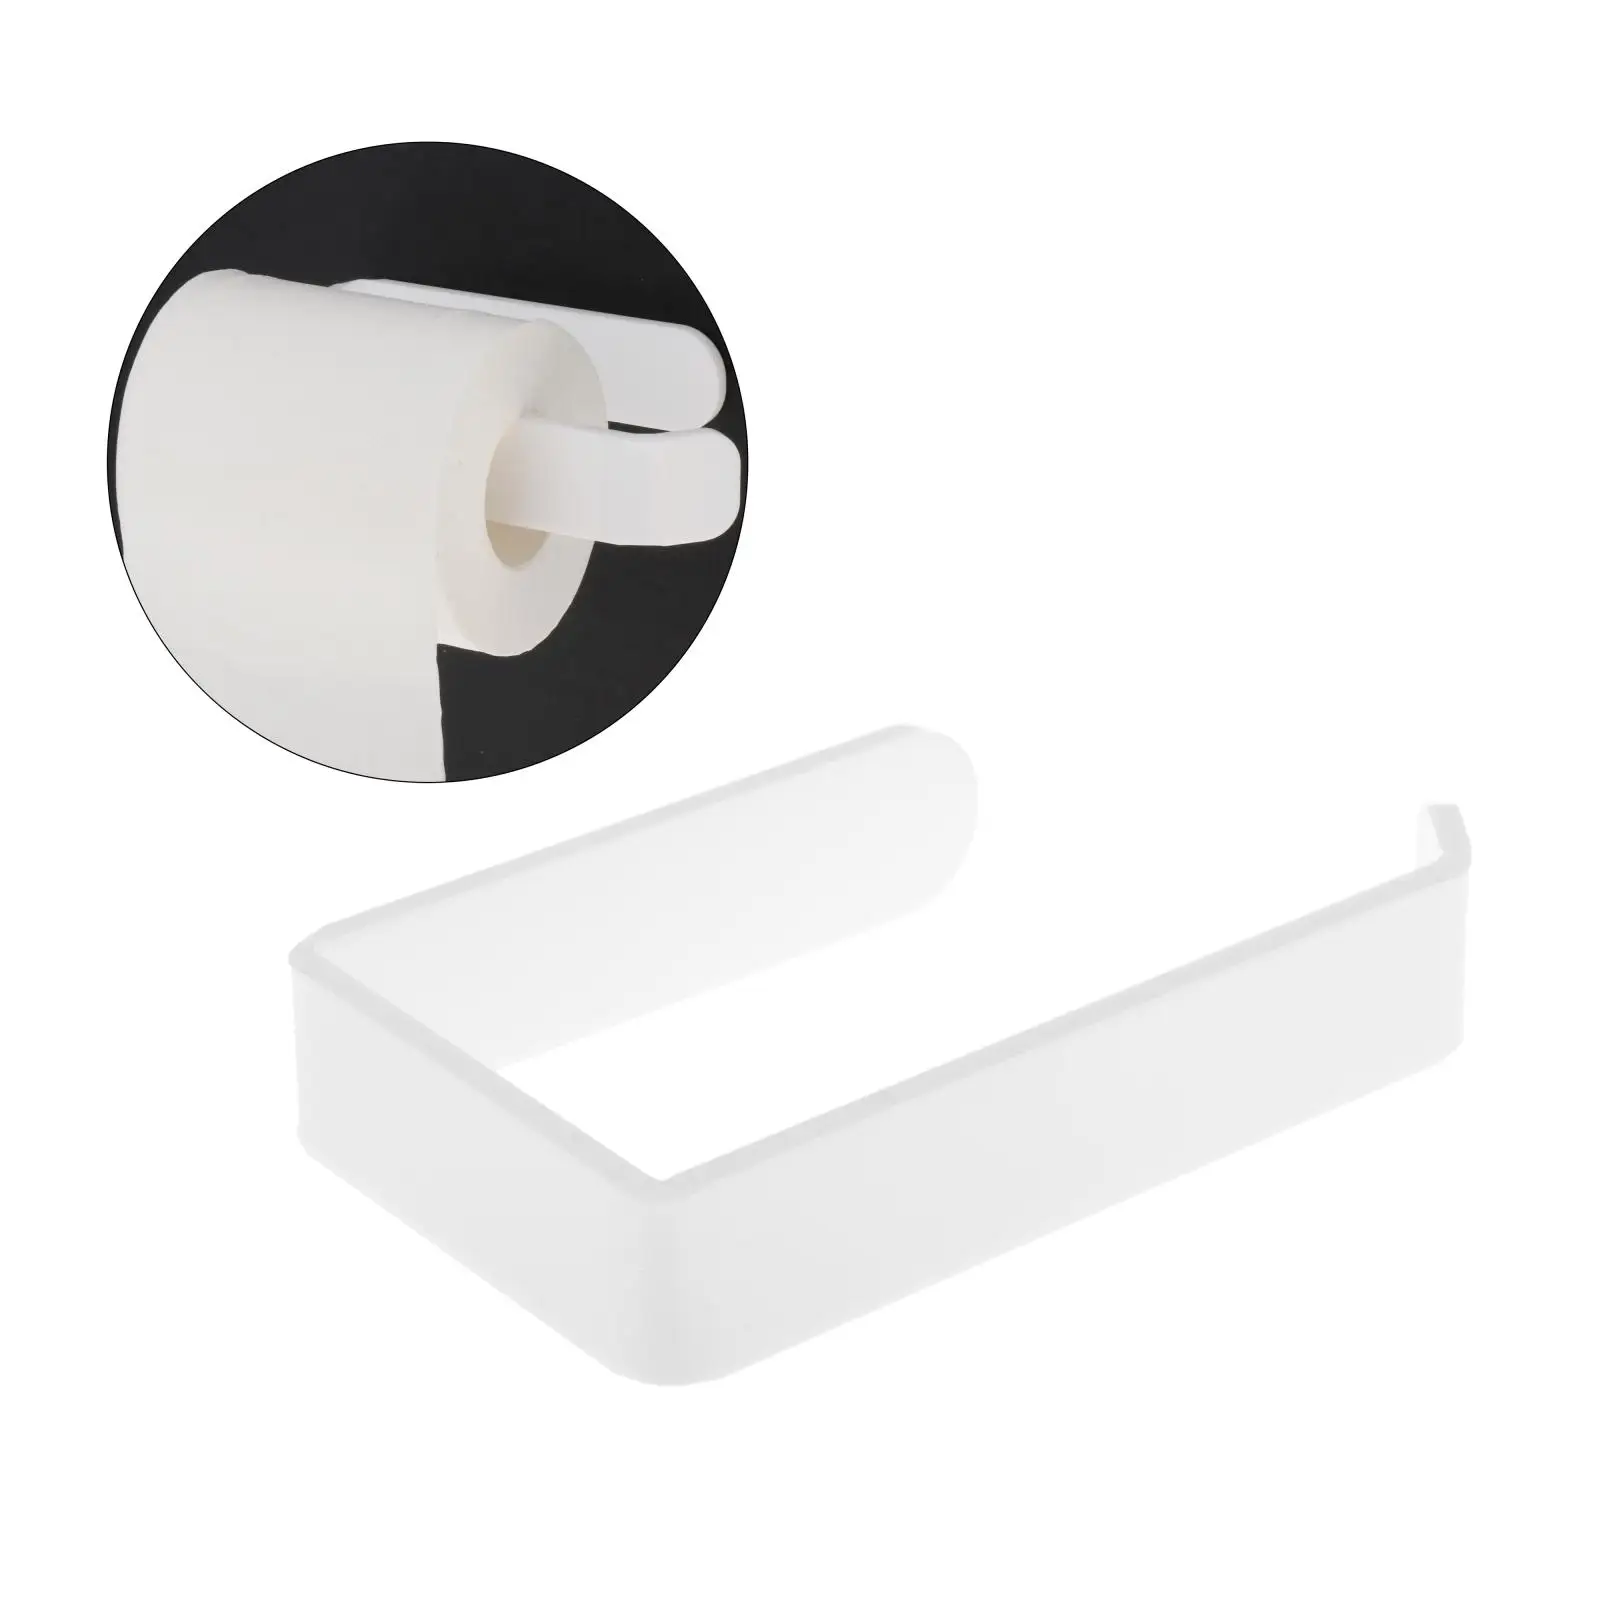 White Acrylic Toilet Paper Holder Wall Mounted Kitchen Bathroom Waterproof Towel Rack Accessories Shelf